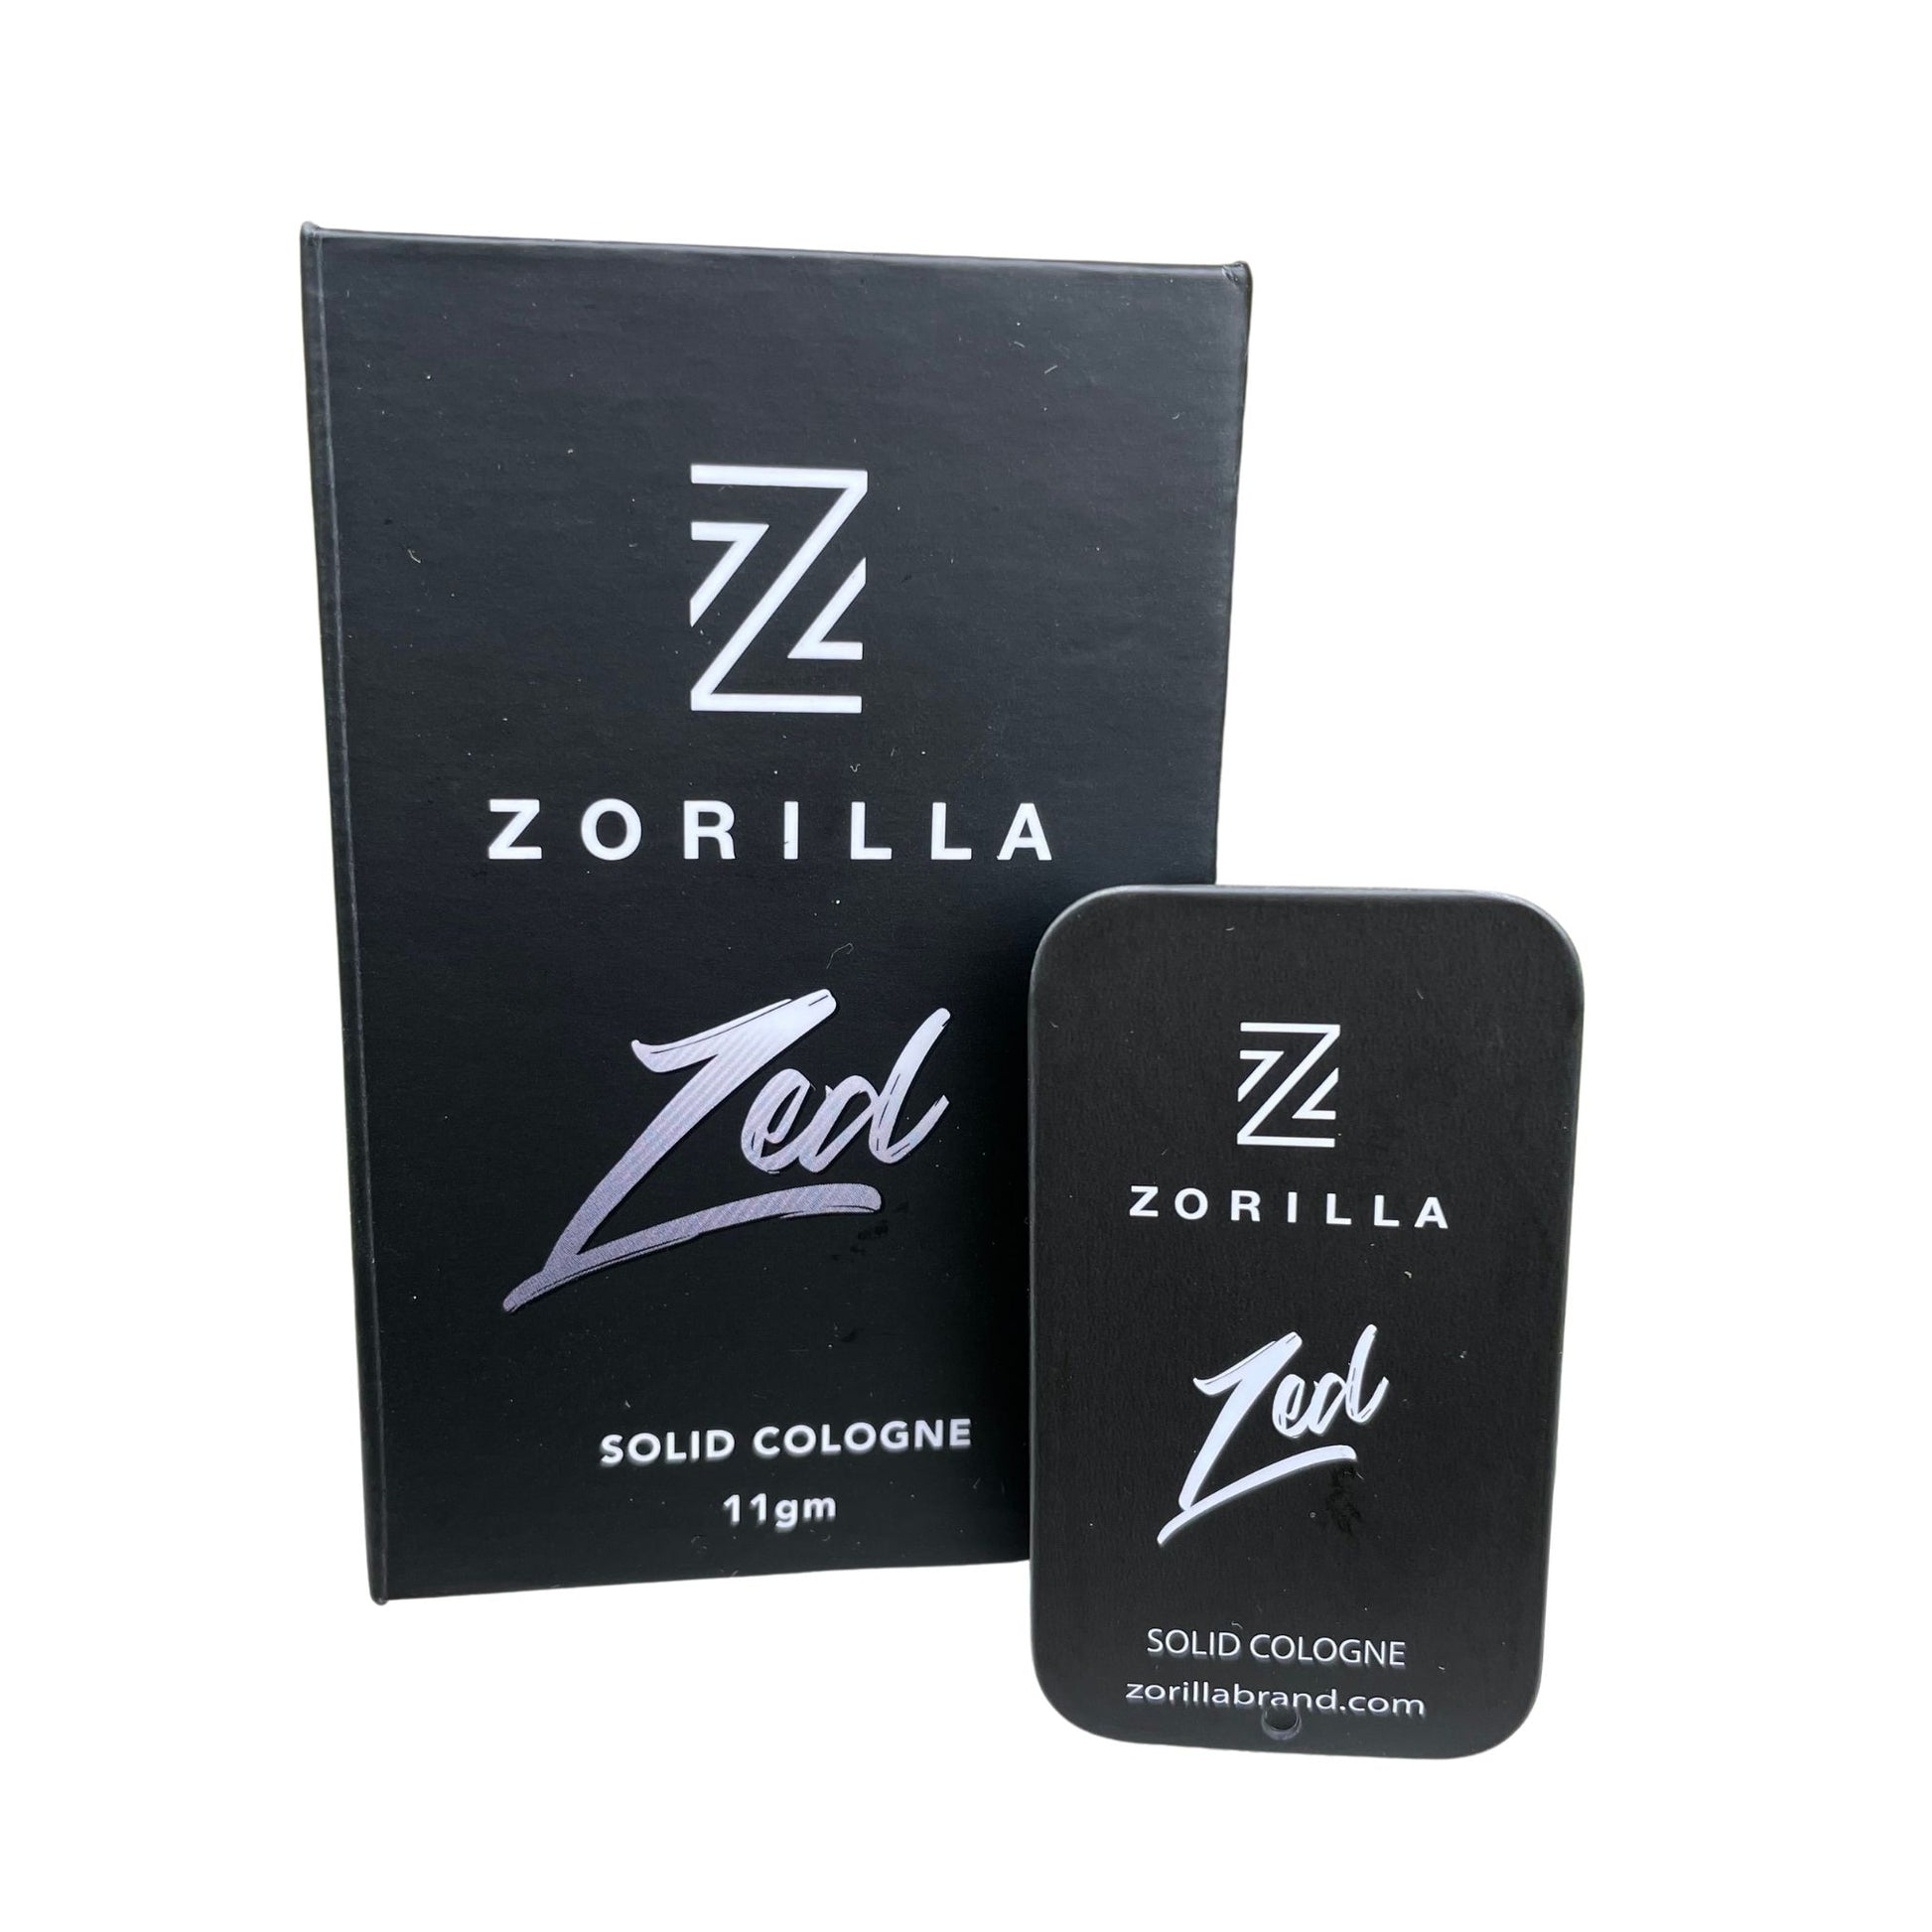 Zorilla men's solid cologne. Fragrance - Zed